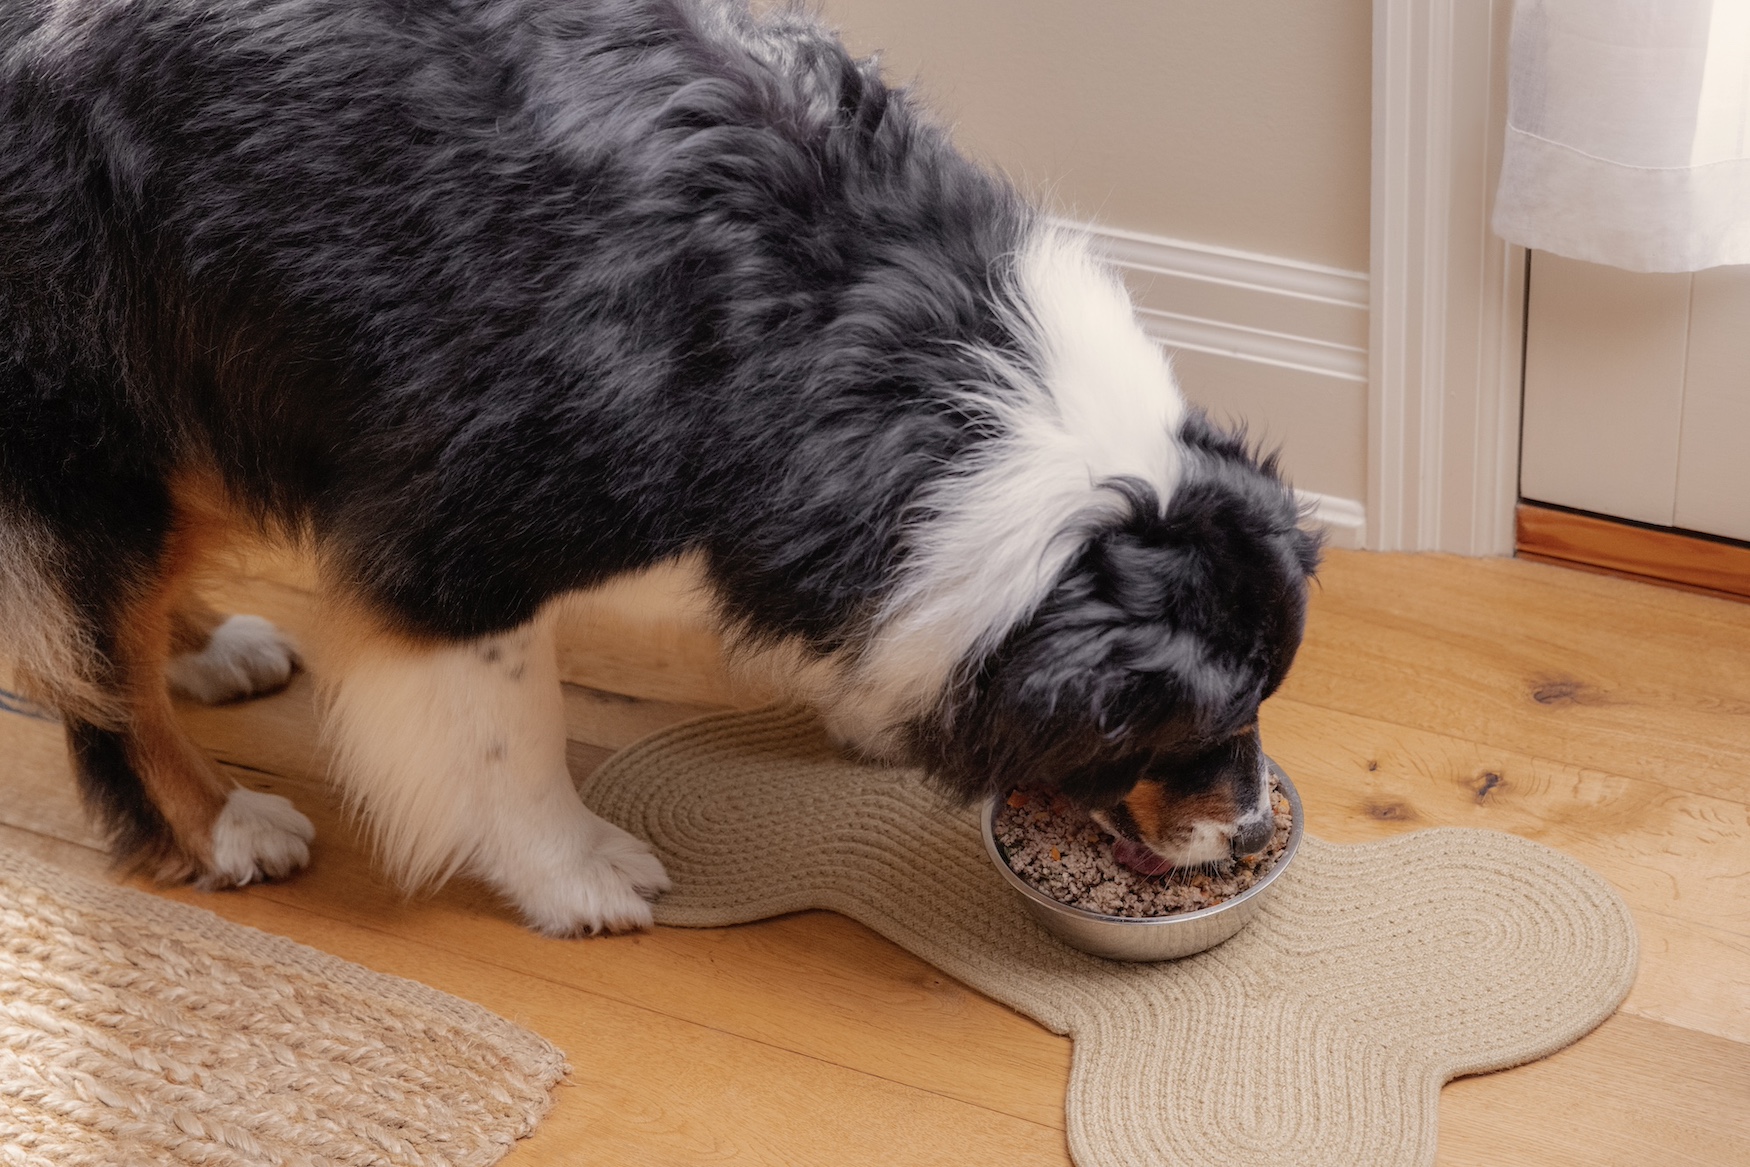 Dog eating fresh food out of metal bowl.